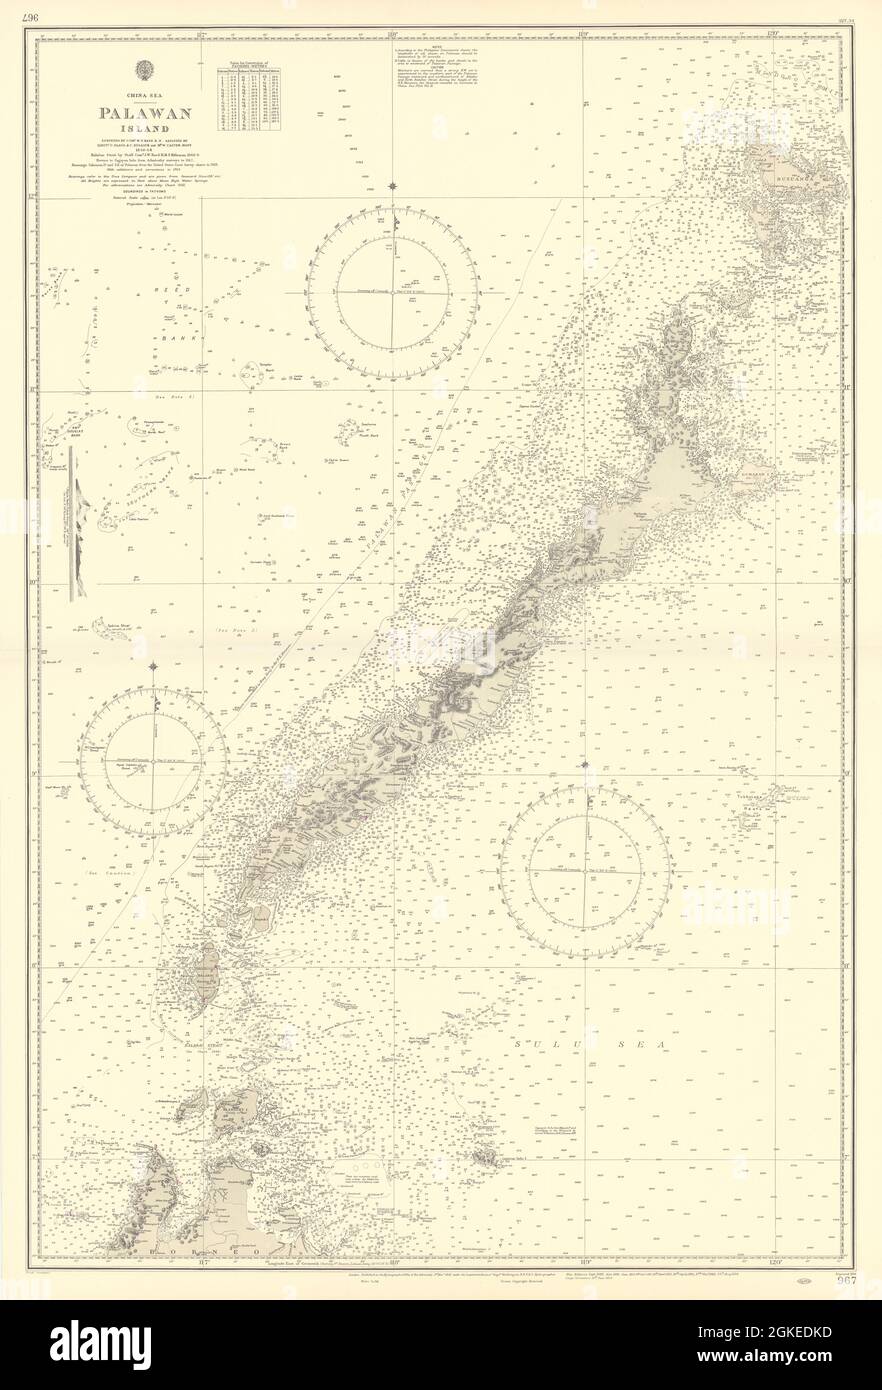 Palawan Island. Philippines. China Sea. ADMIRALTY sea chart 1856 (1954) map Stock Photo